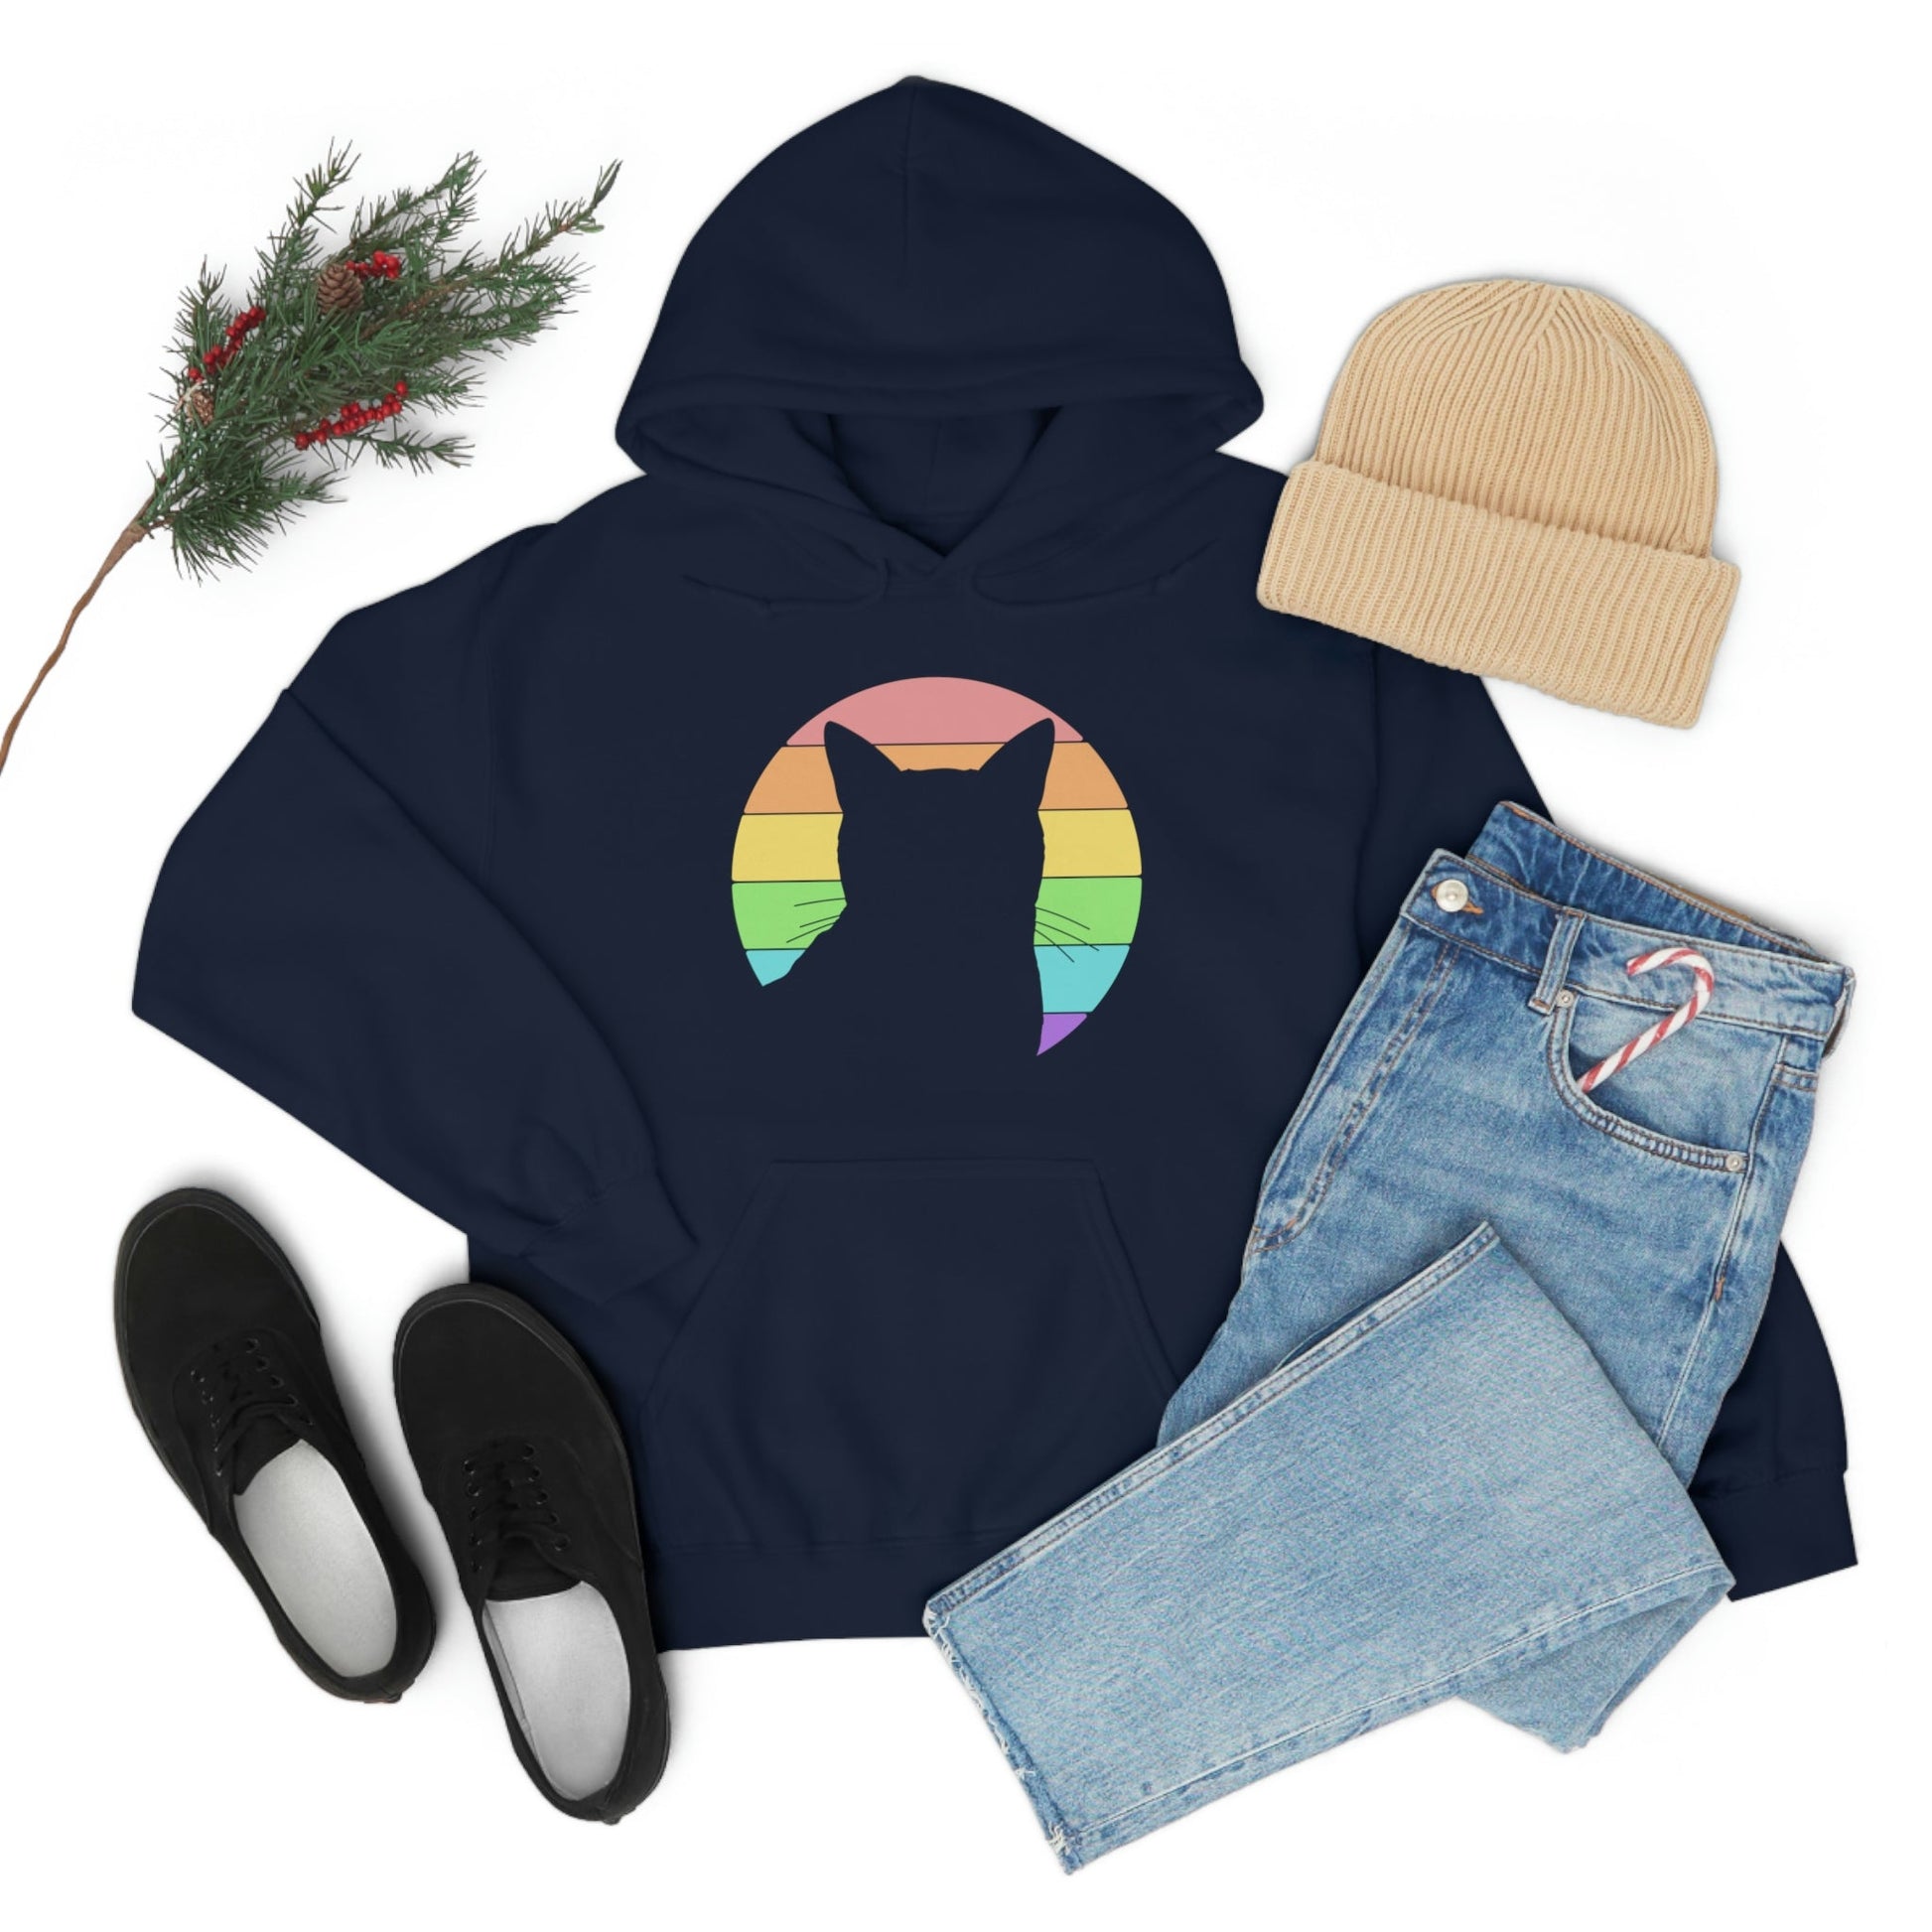 LGBTQ+ Pride | Cat Silhouette | Hooded Sweatshirt - Detezi Designs-25295120886256247361